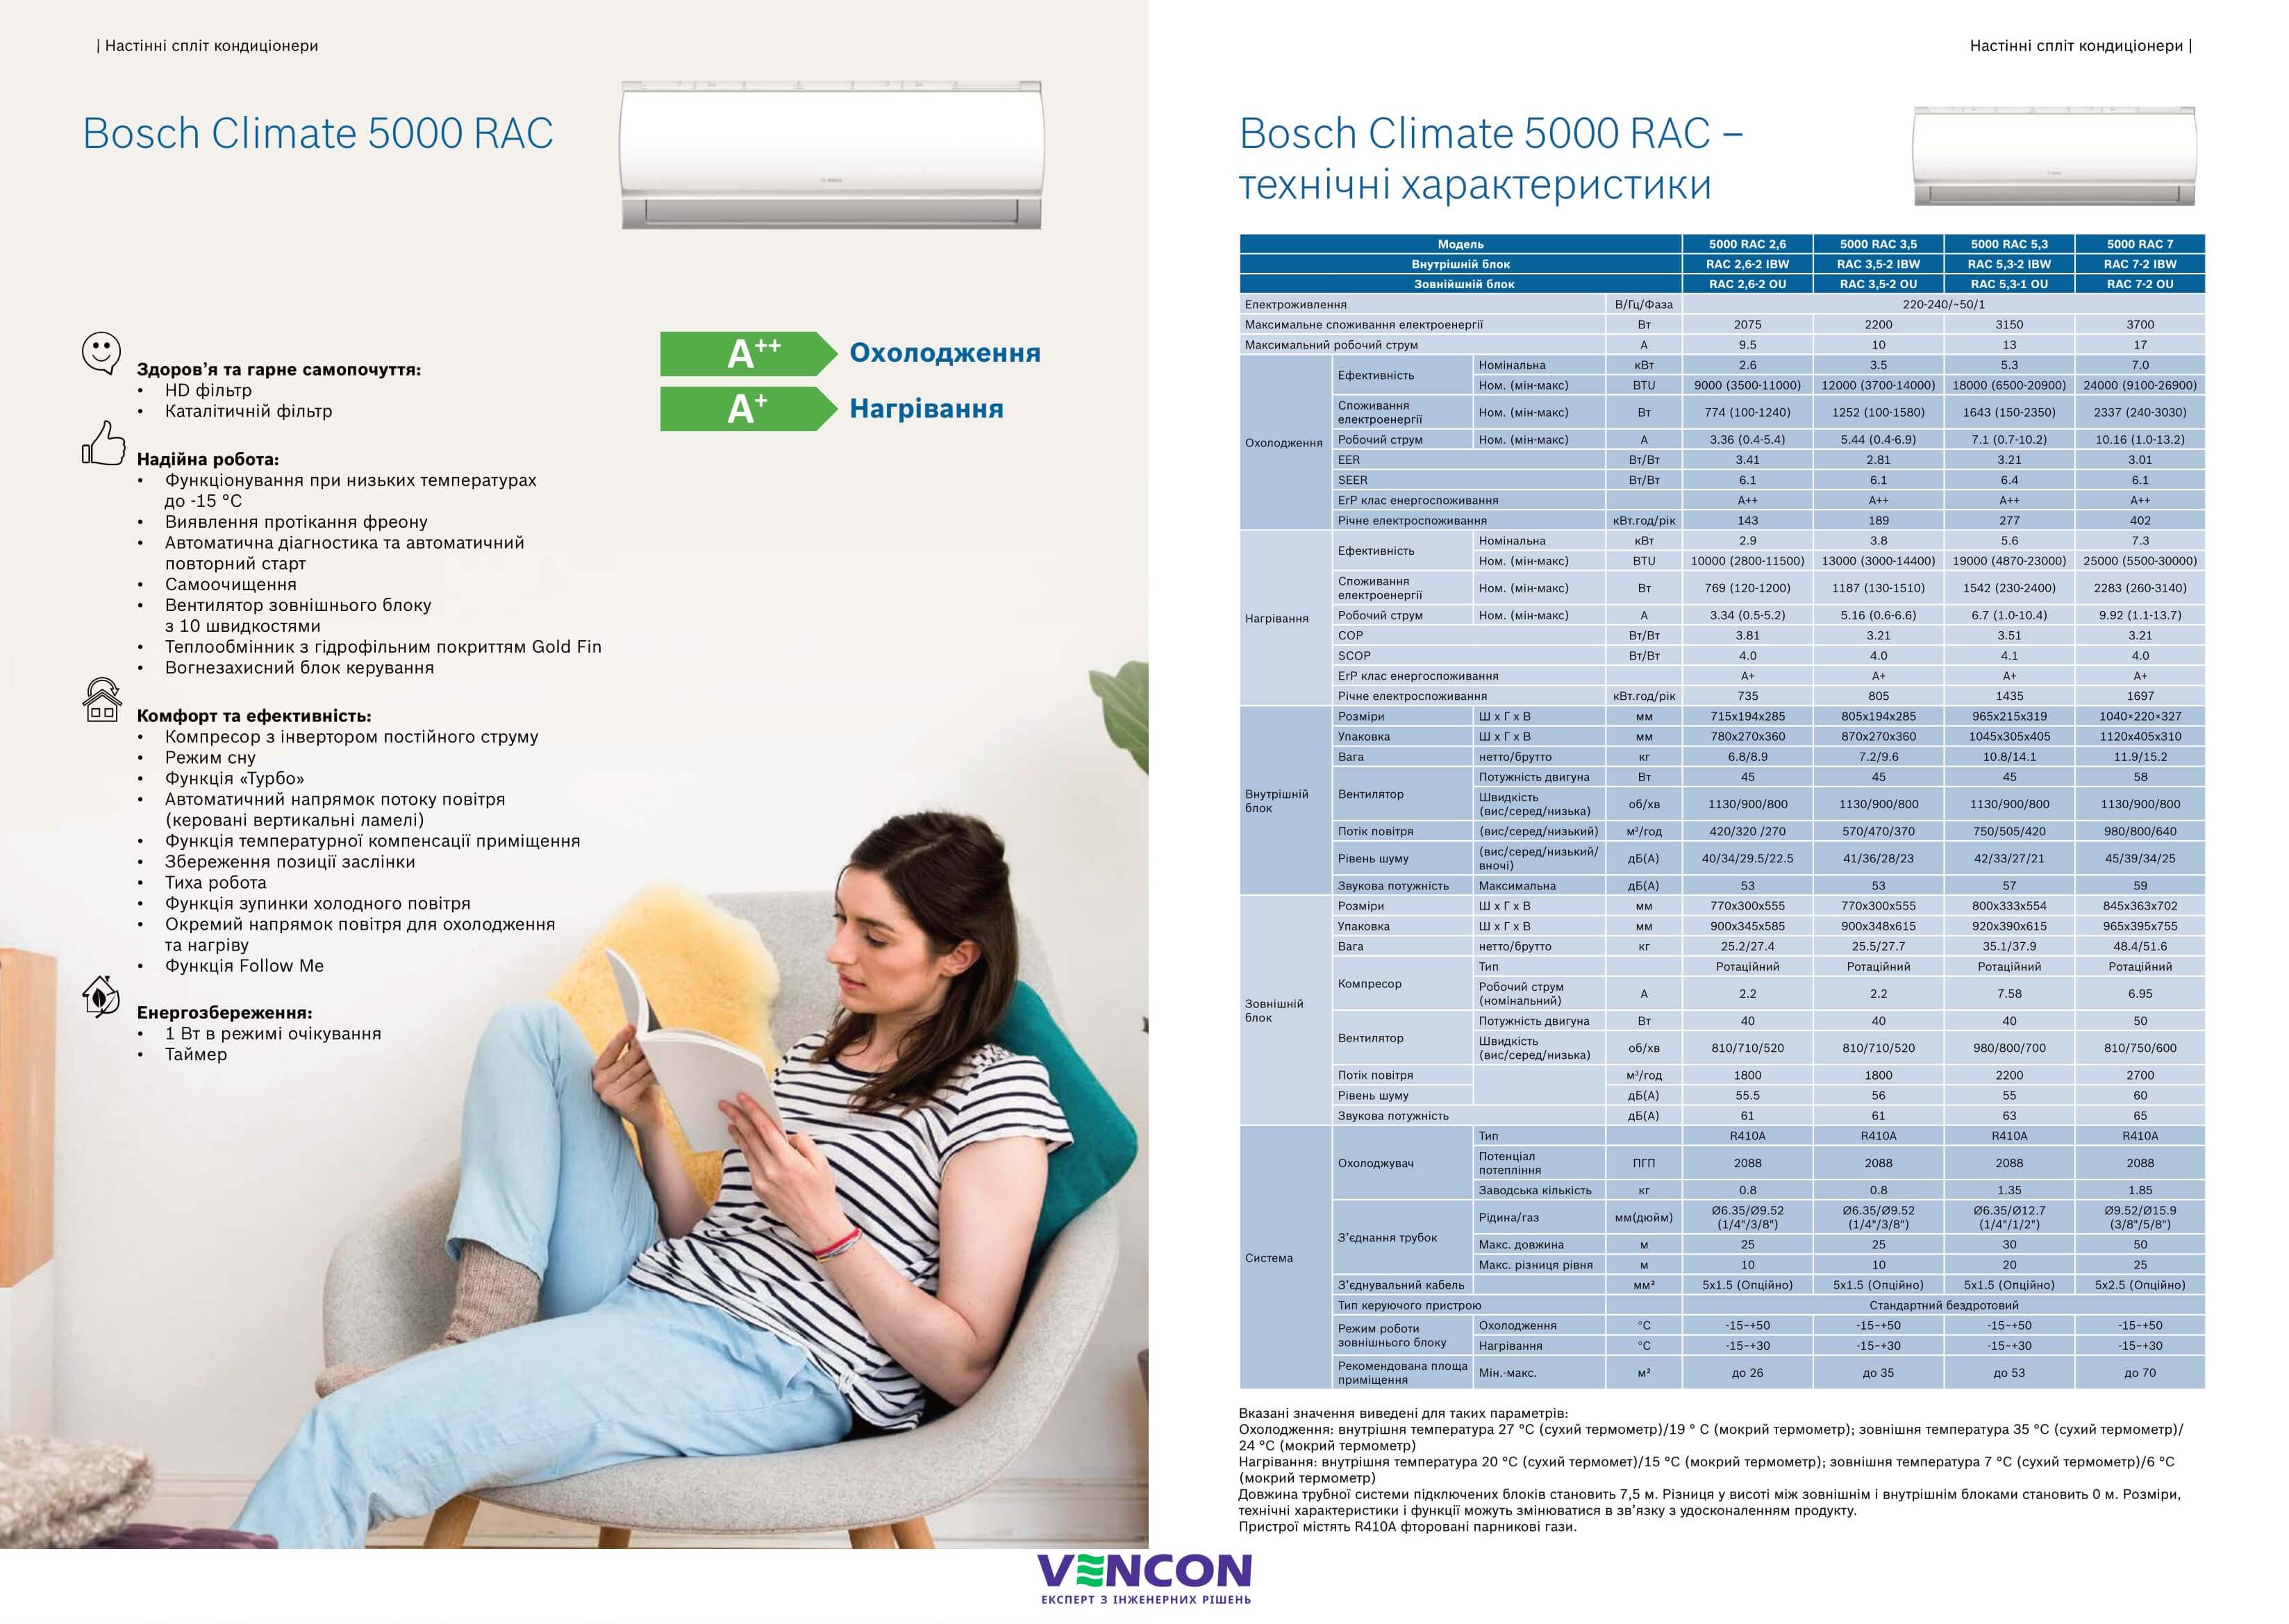 Bosch Climate 5000 RAC 3,5-2 IBW Характеристики